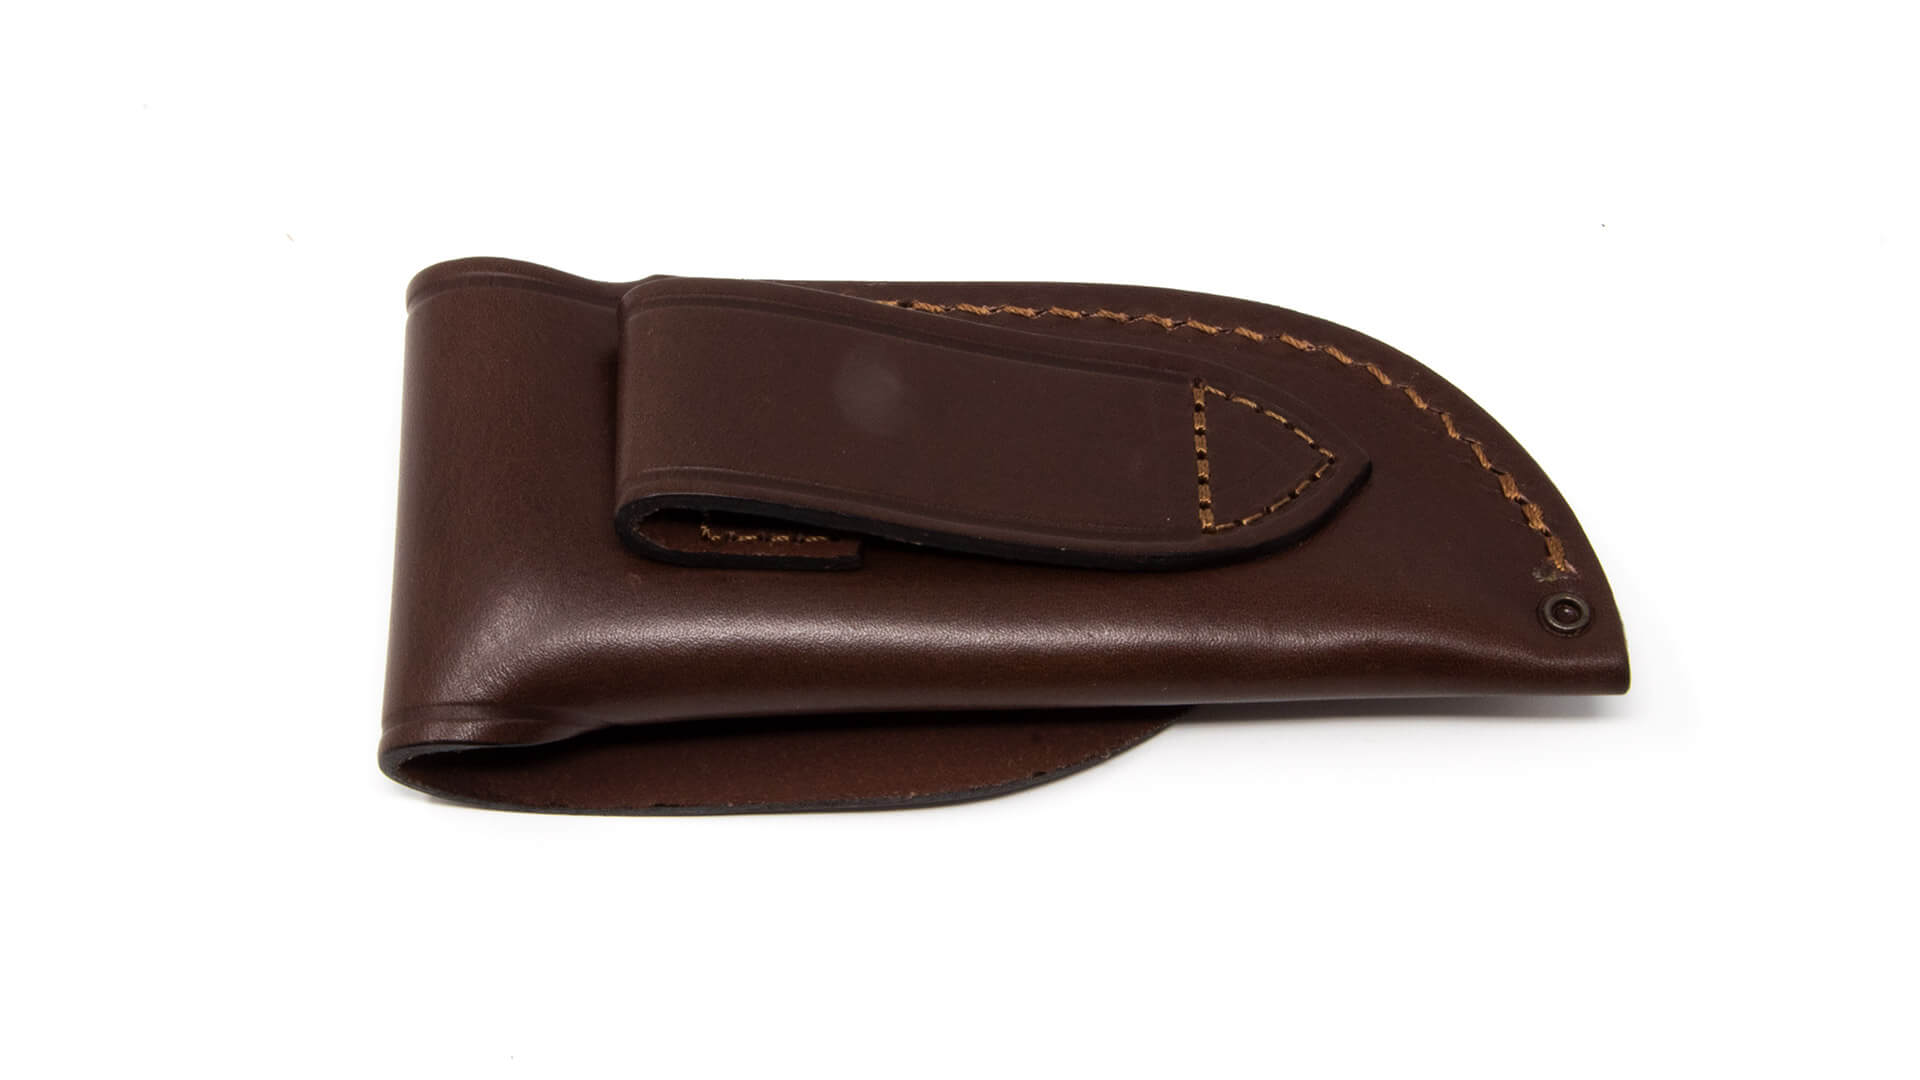 puma-belt-case-brown-pocket-knife-rear view-993567